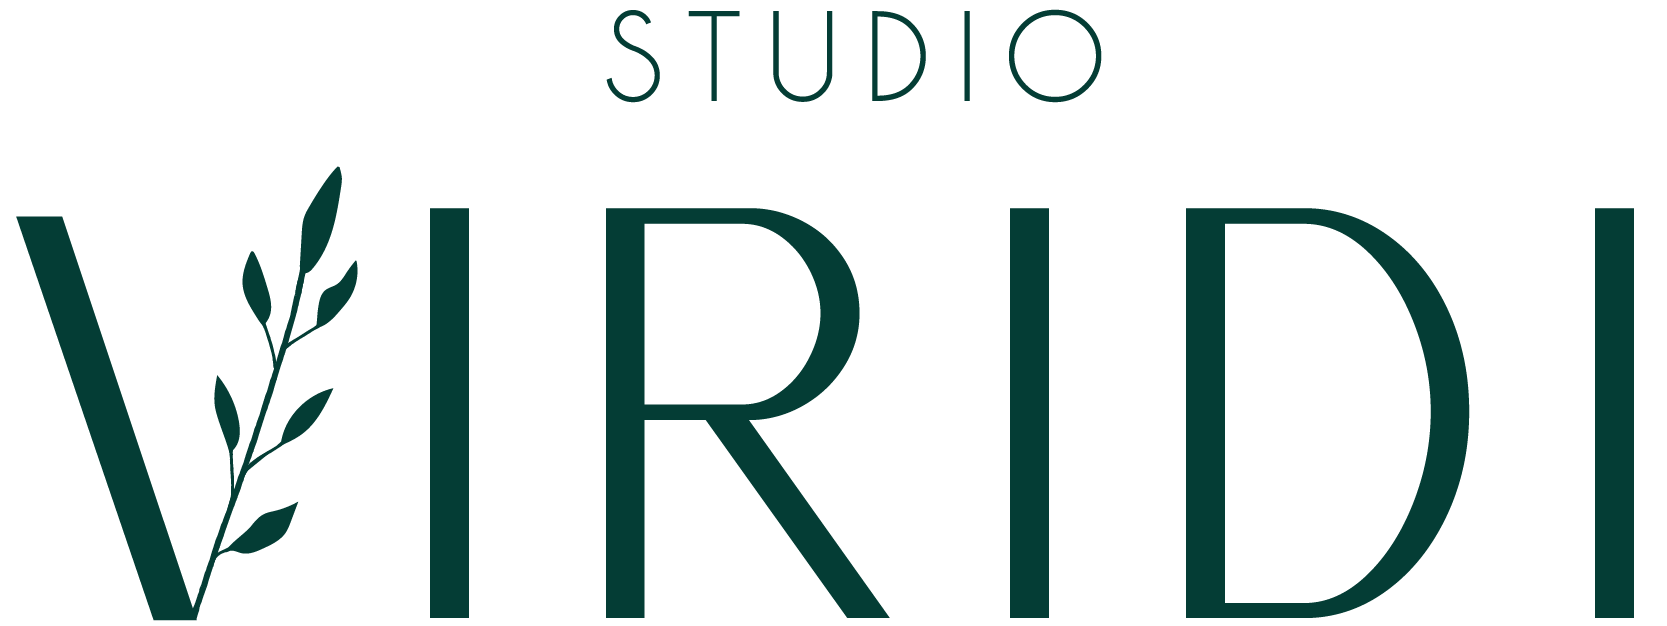 Studio Viridi | duurzaam interieur | duurzaam interieuradvies